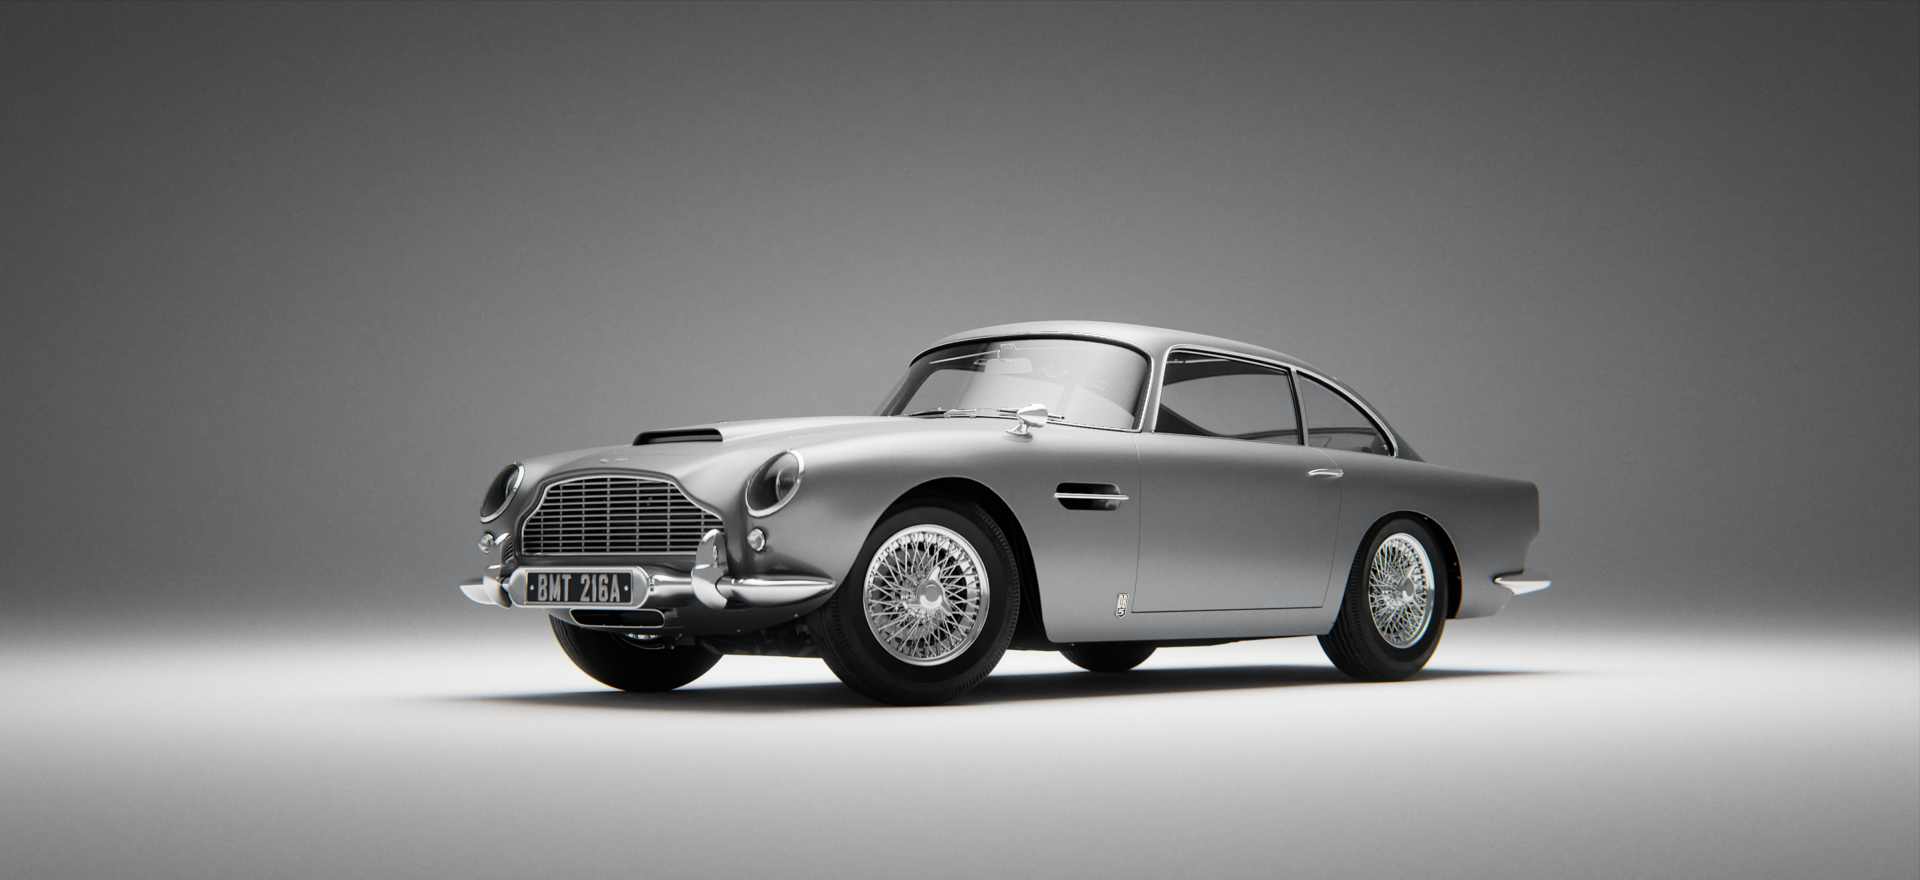 Aston Martin DB5 James Bond - Finished Projects - Blender Artists Community